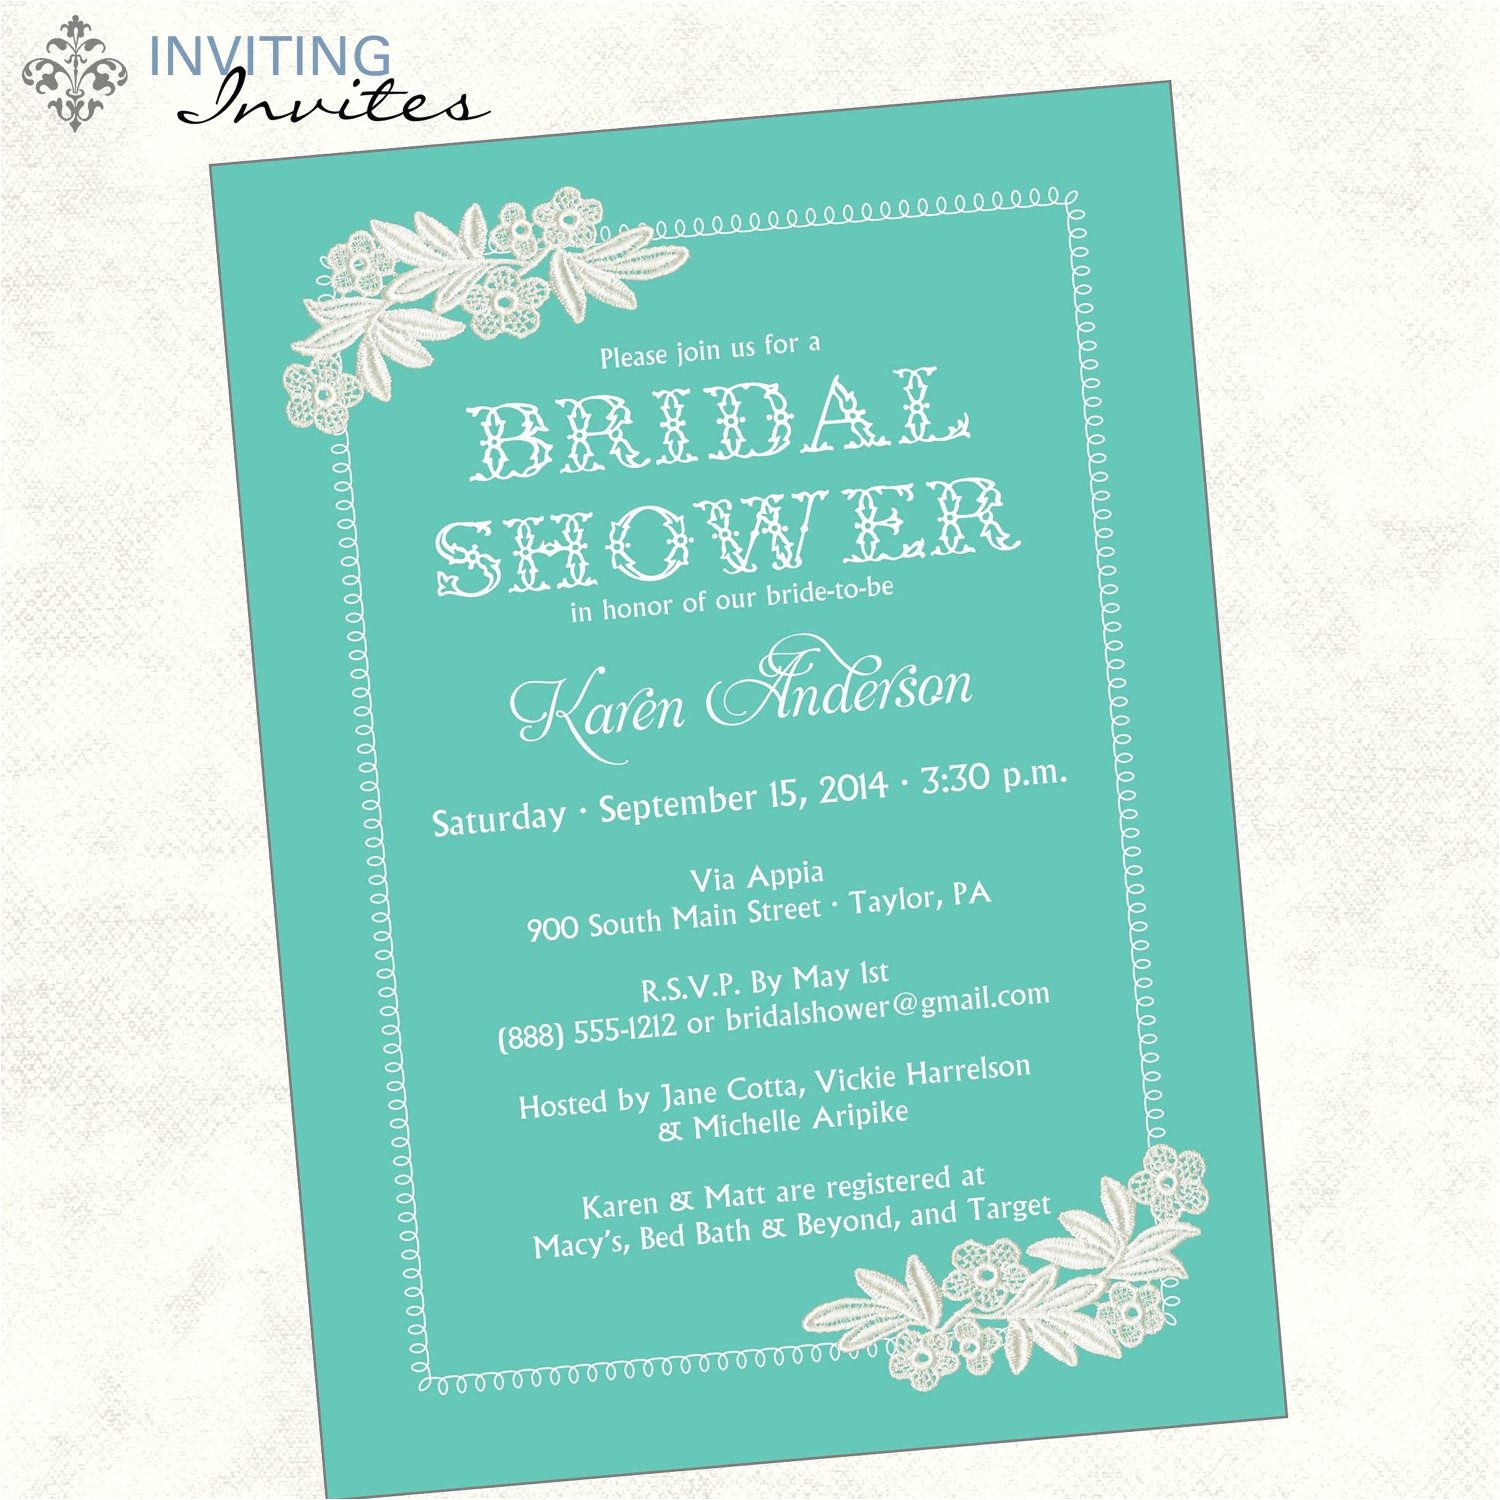 Bridal Shower Invitation Text Bridal Shower Invite Bridal Shower Invite Wording Card